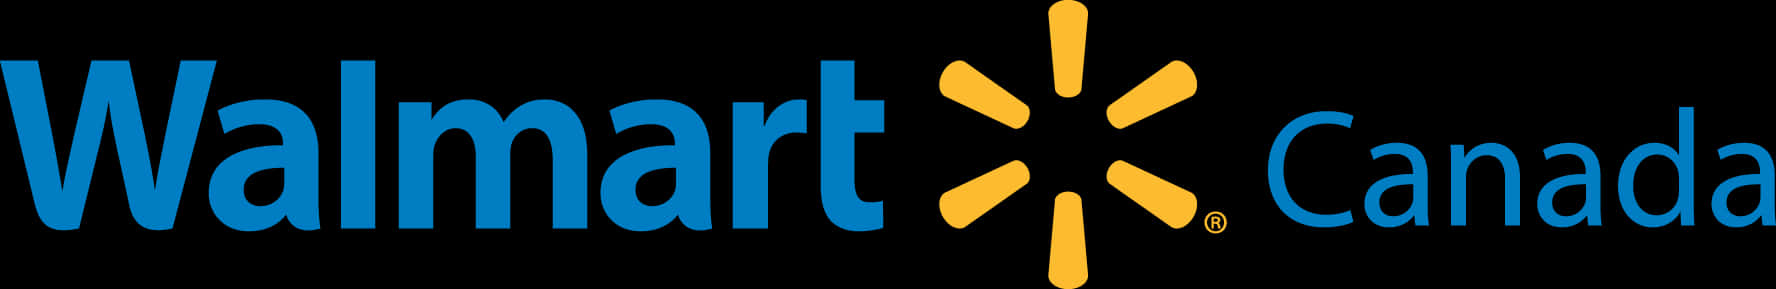 Walmart Canada Logo PNG image